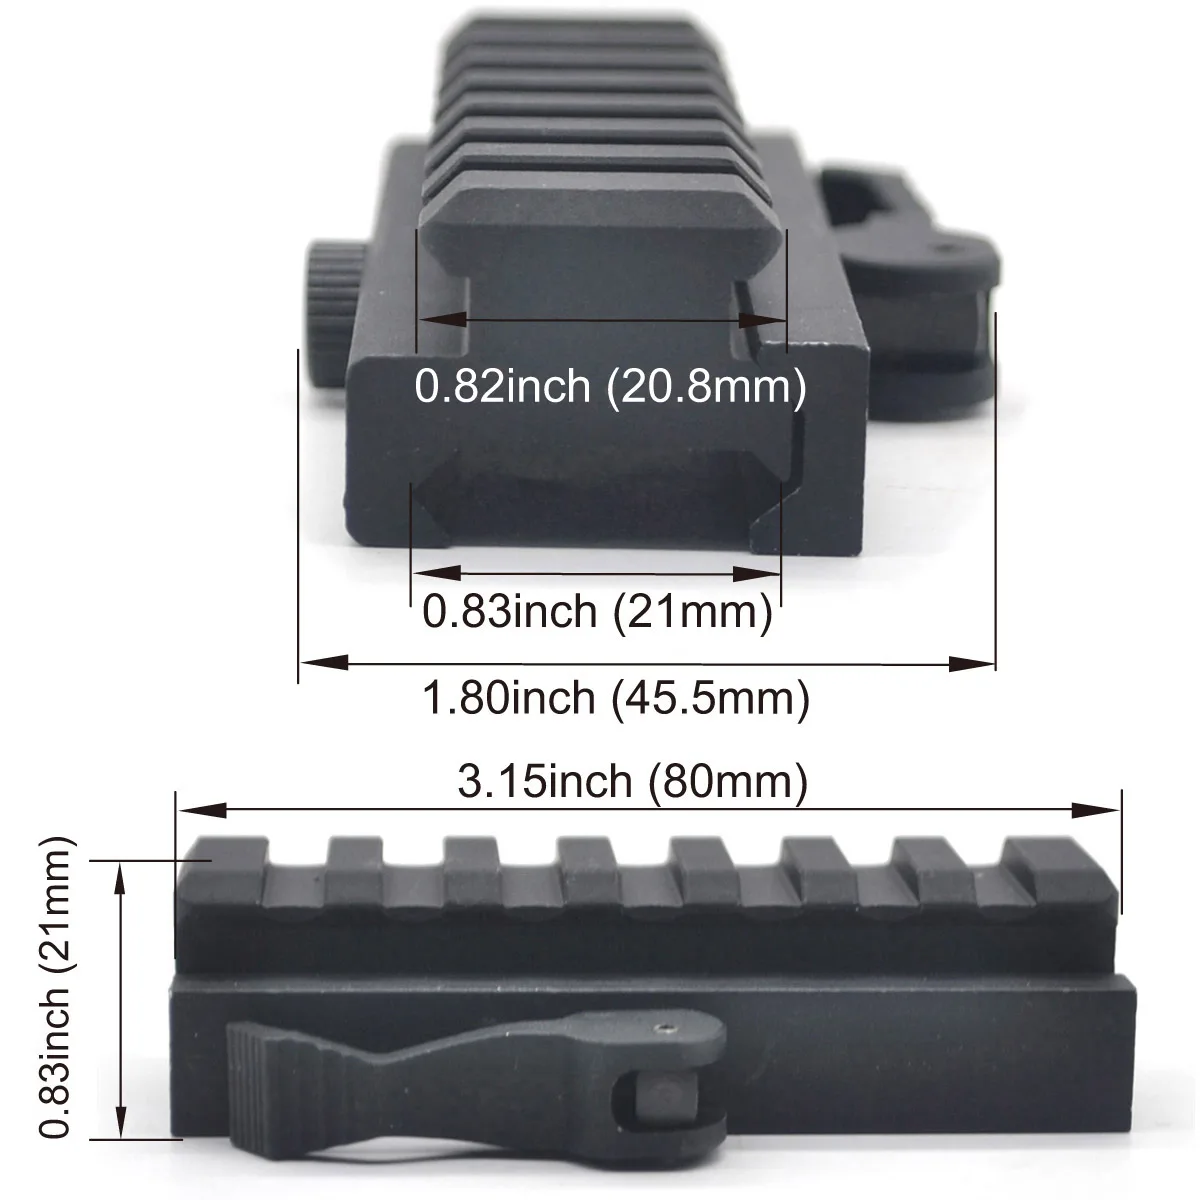 Aplus Quick Detachable Tactical optional 5, 7, 9 slots Picatinny Riser Scope Lever Mount Base Adapter fits 20mm rails - Black